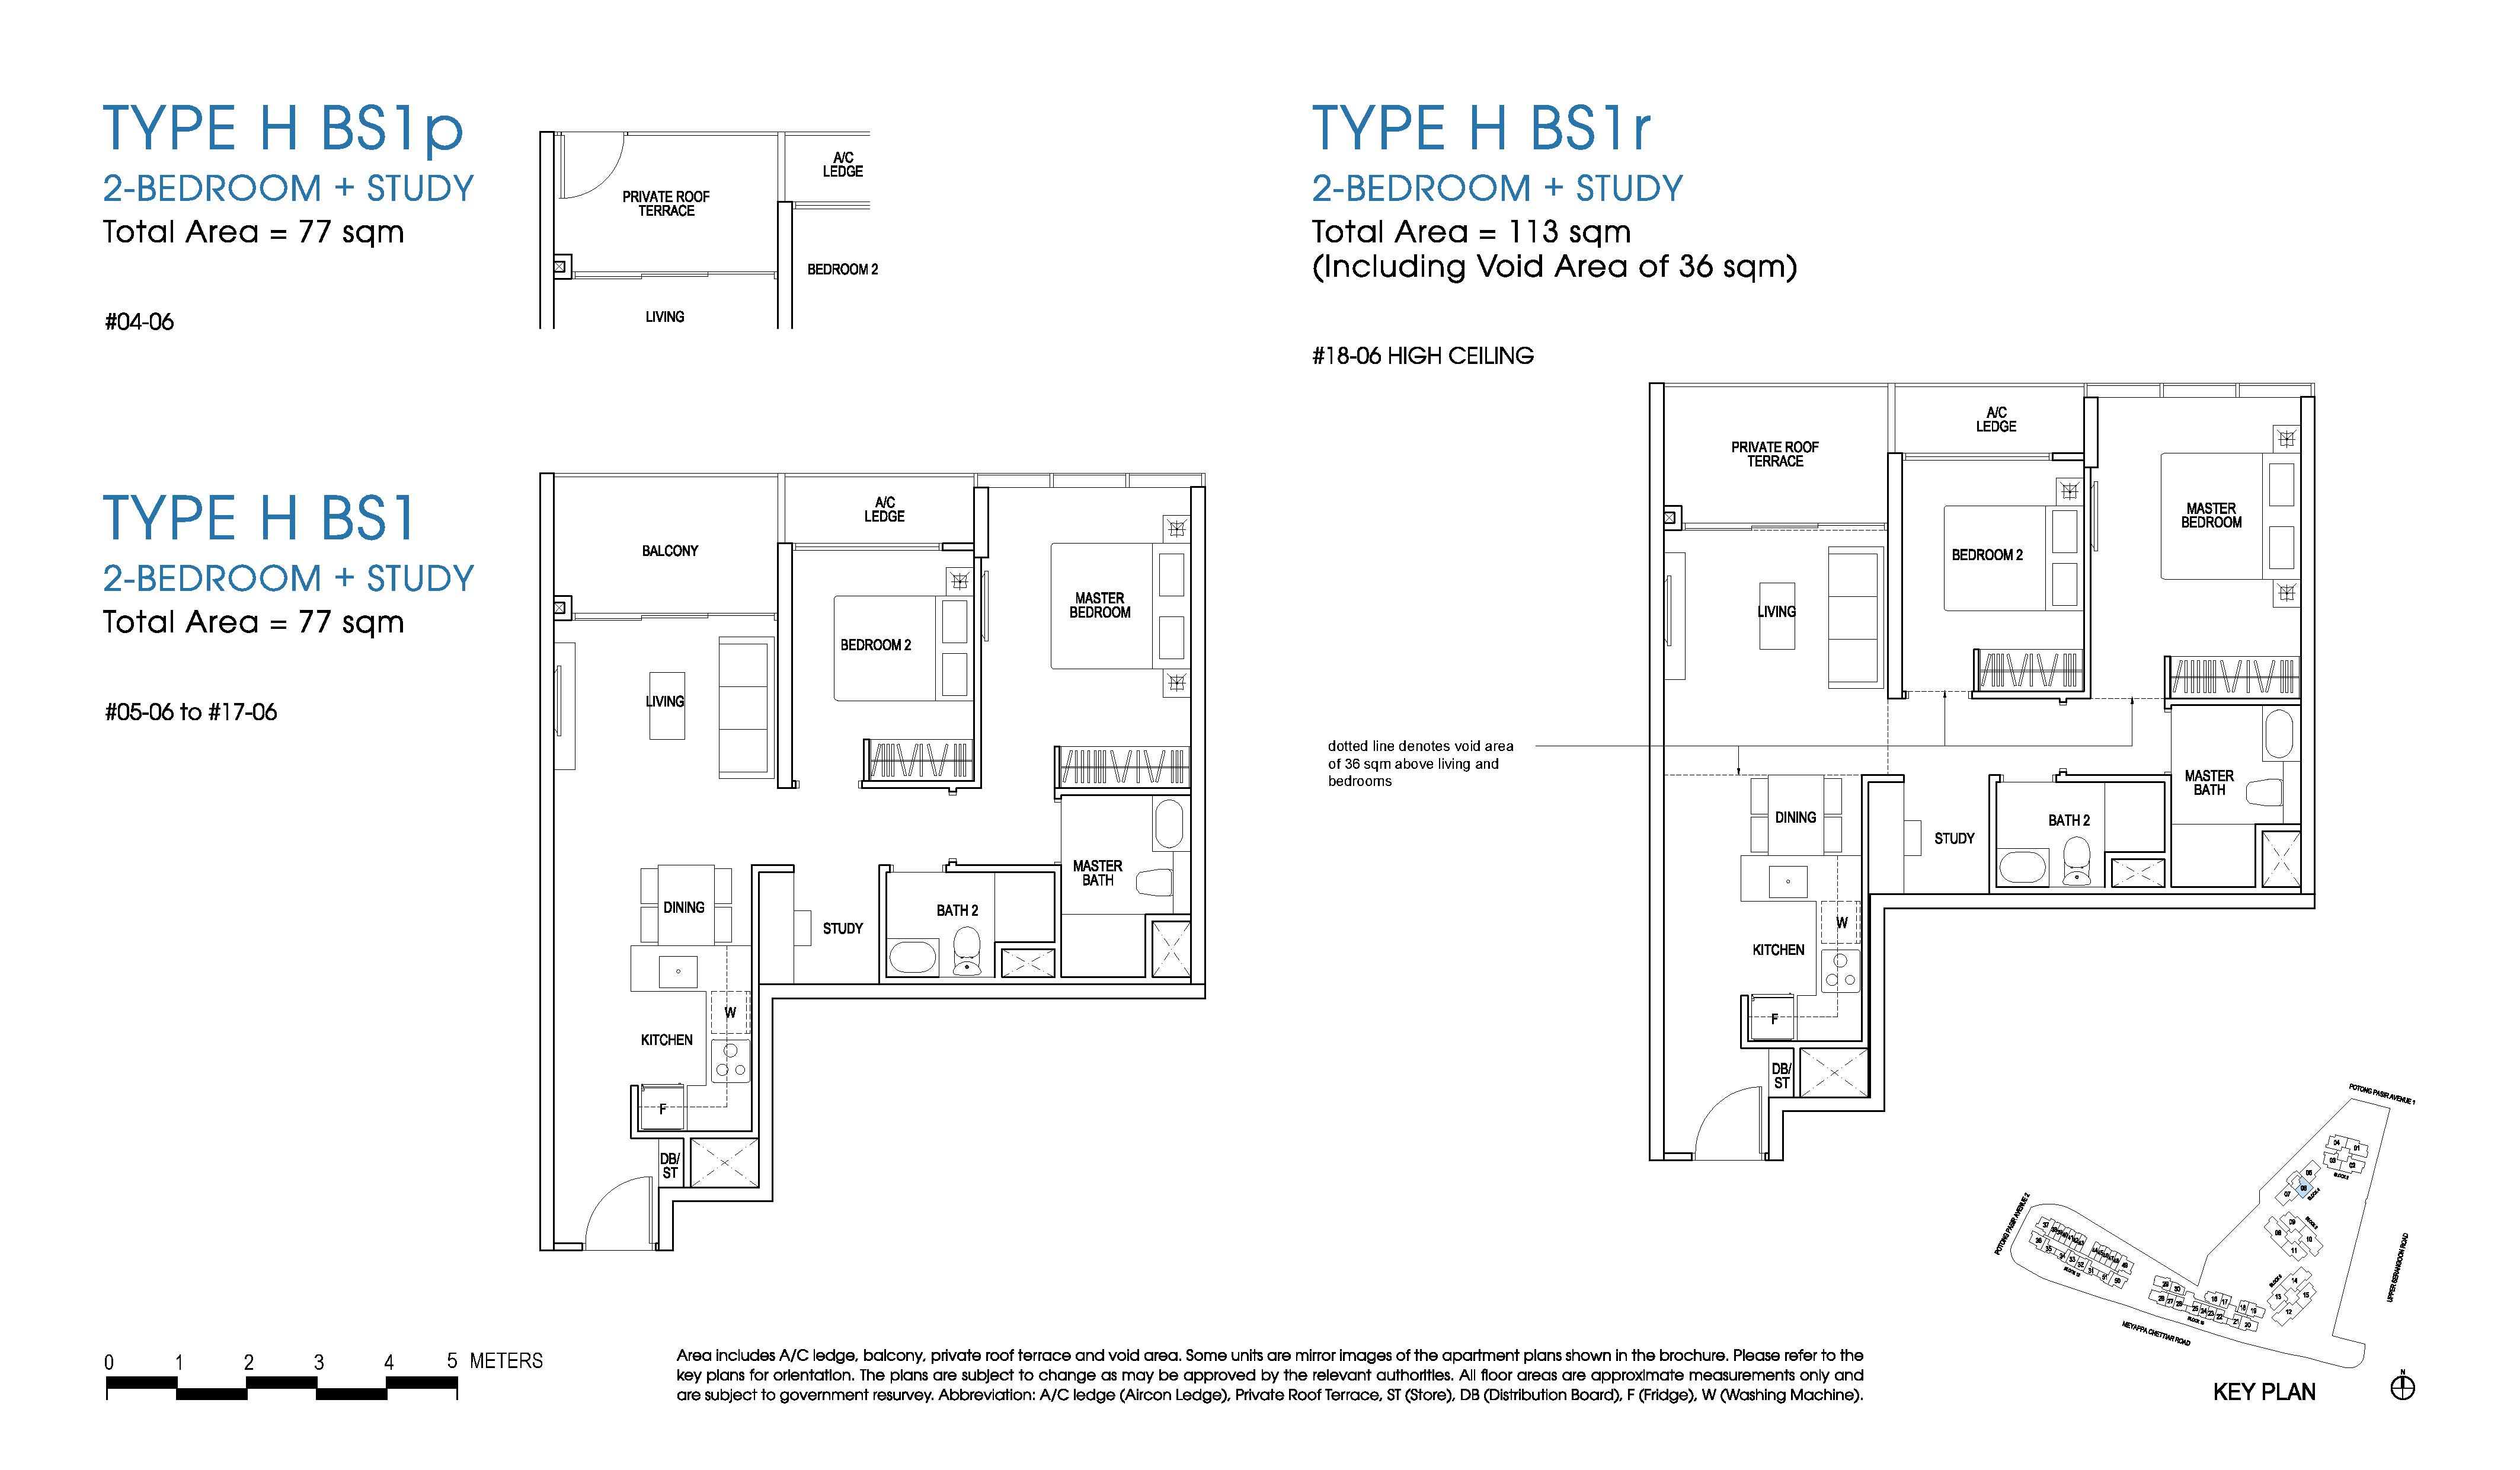 The Poiz Residences Habitat 2 Bedroom + Study Type H BS1p, H BS1, H BS1r Floor Plans 